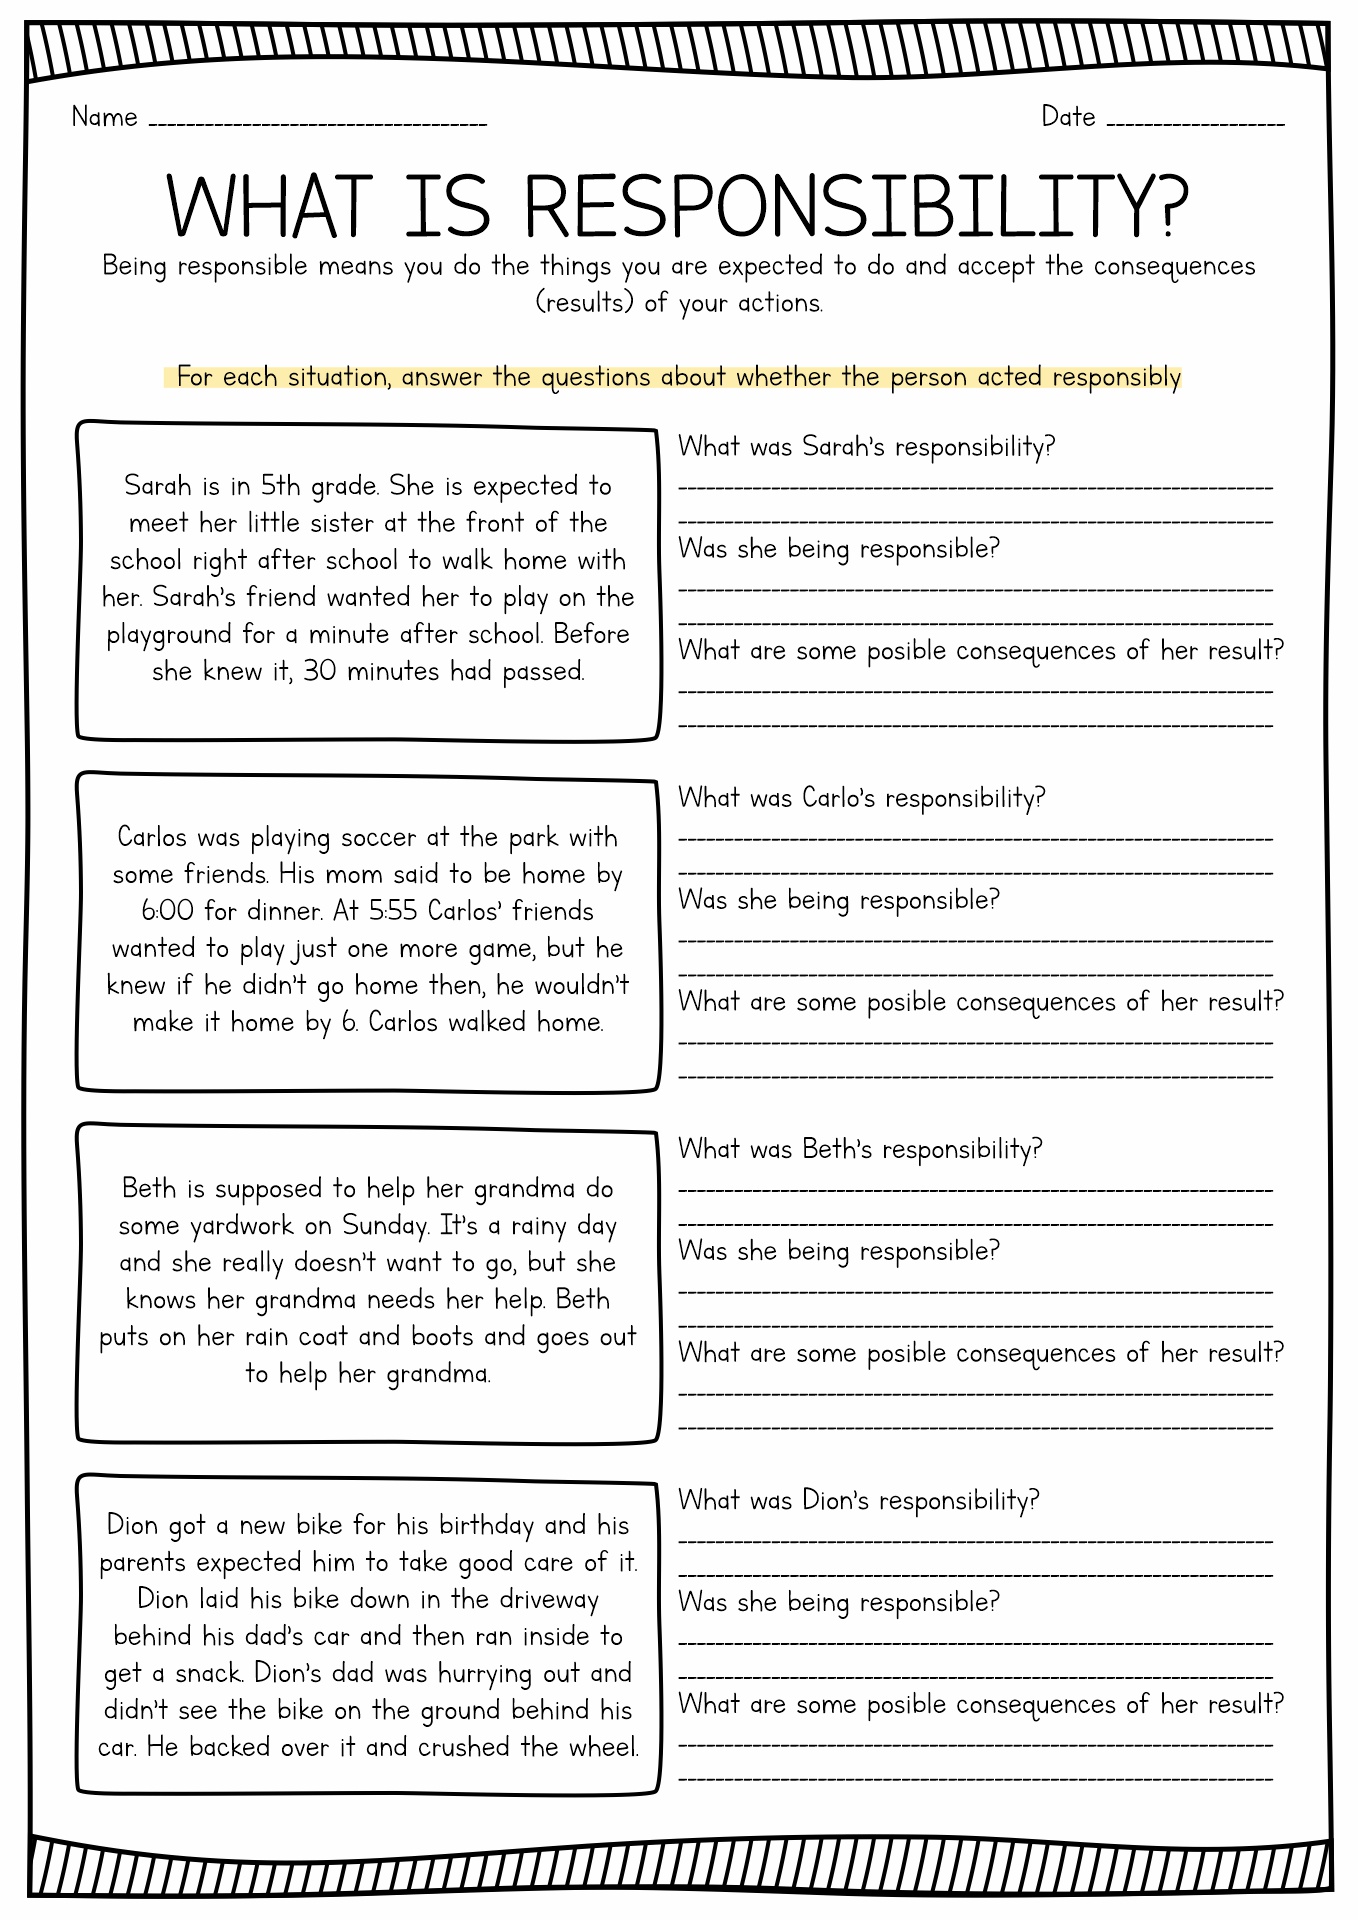 Responsibility Social Skills Worksheets Image